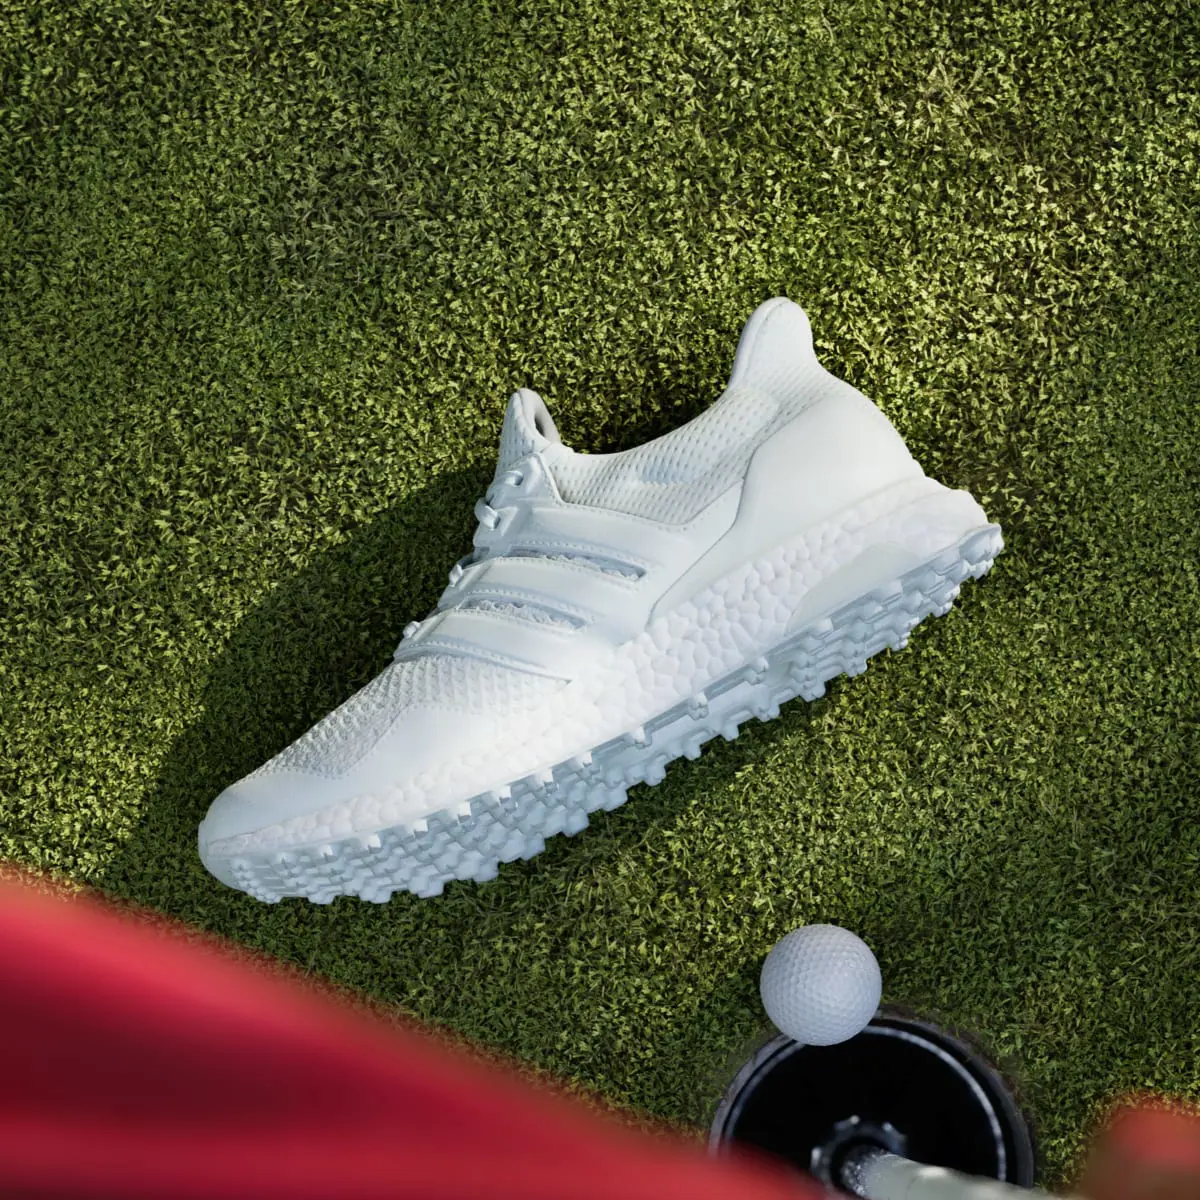 Adidas Ultraboost Golf Shoes. 2